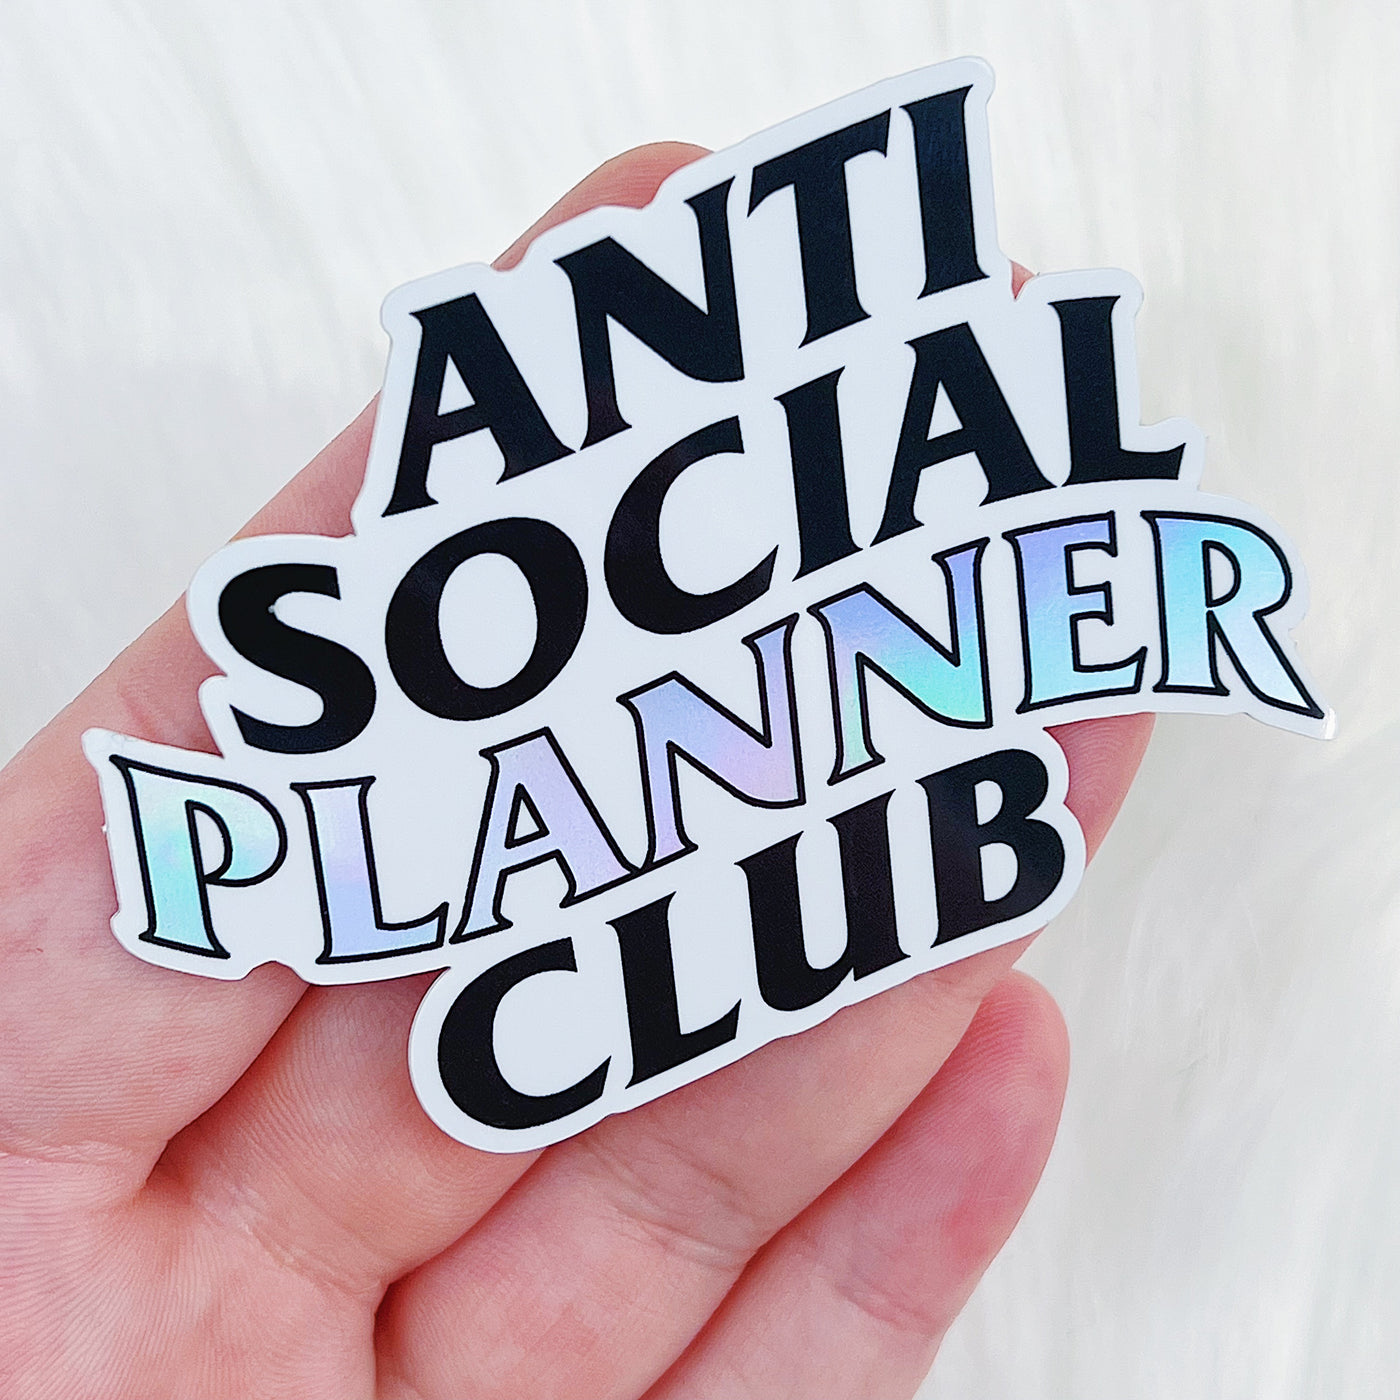 Anti Social Planner Club Vinyl Sticker Die Cut | Holographic Foil